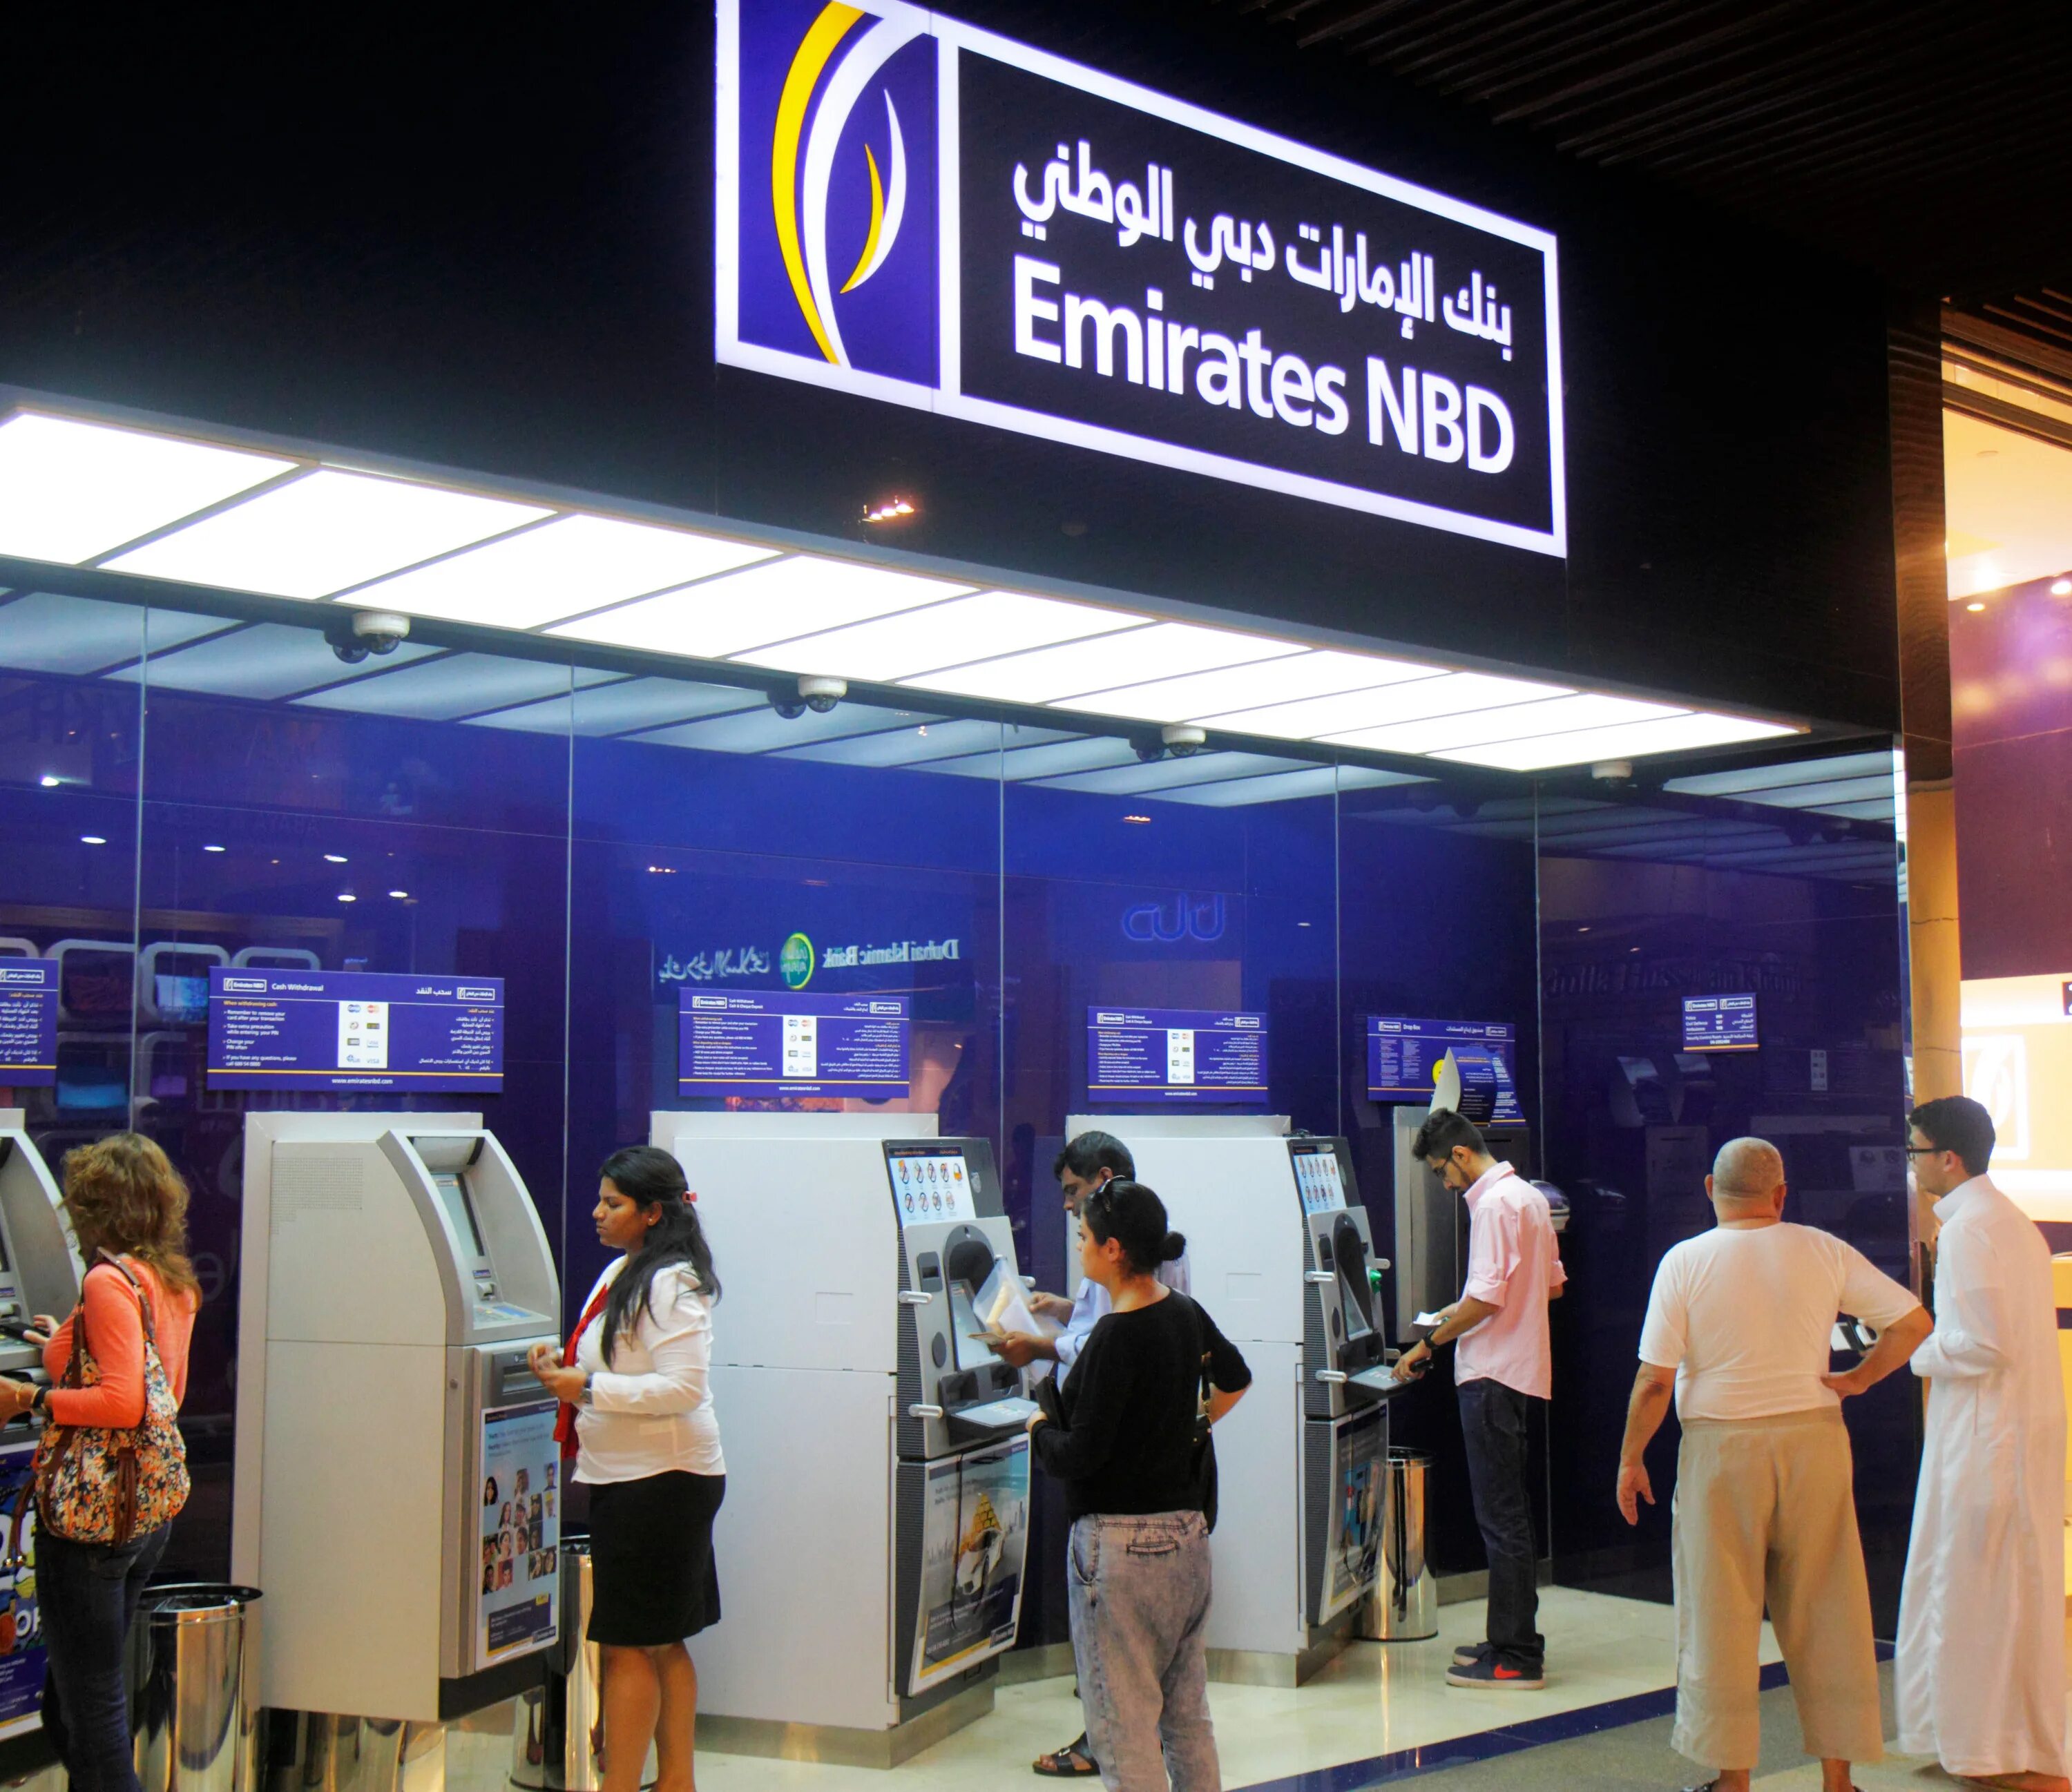 Emirates nbd bank. ОАЭ Emirates NBD. Банк в Дубае. НБД банк Дубай.